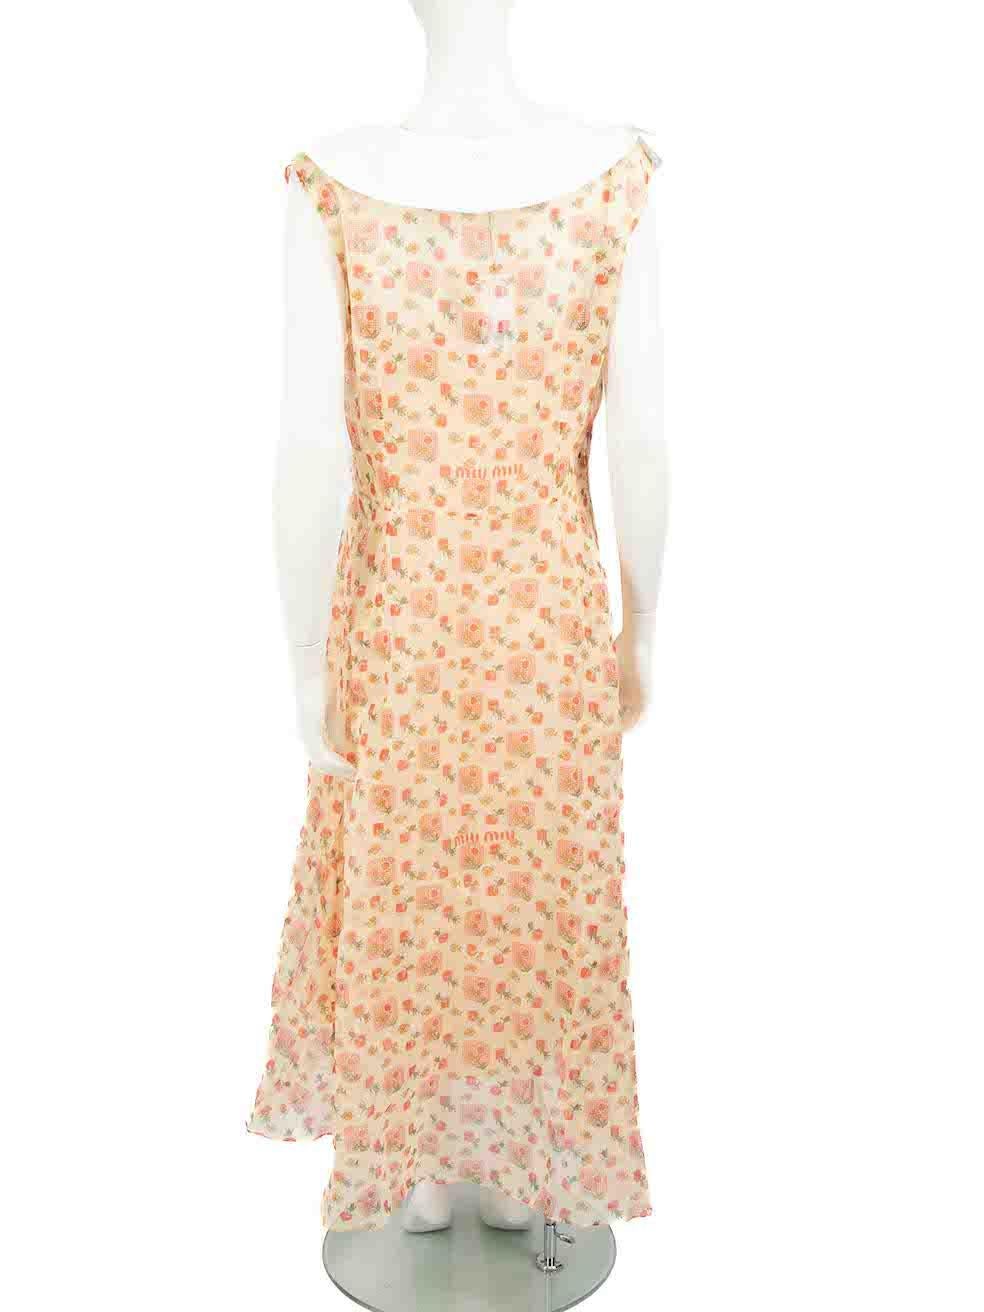 Miu Miu Beige Floral Print Midi Dress Size M In New Condition For Sale In London, GB